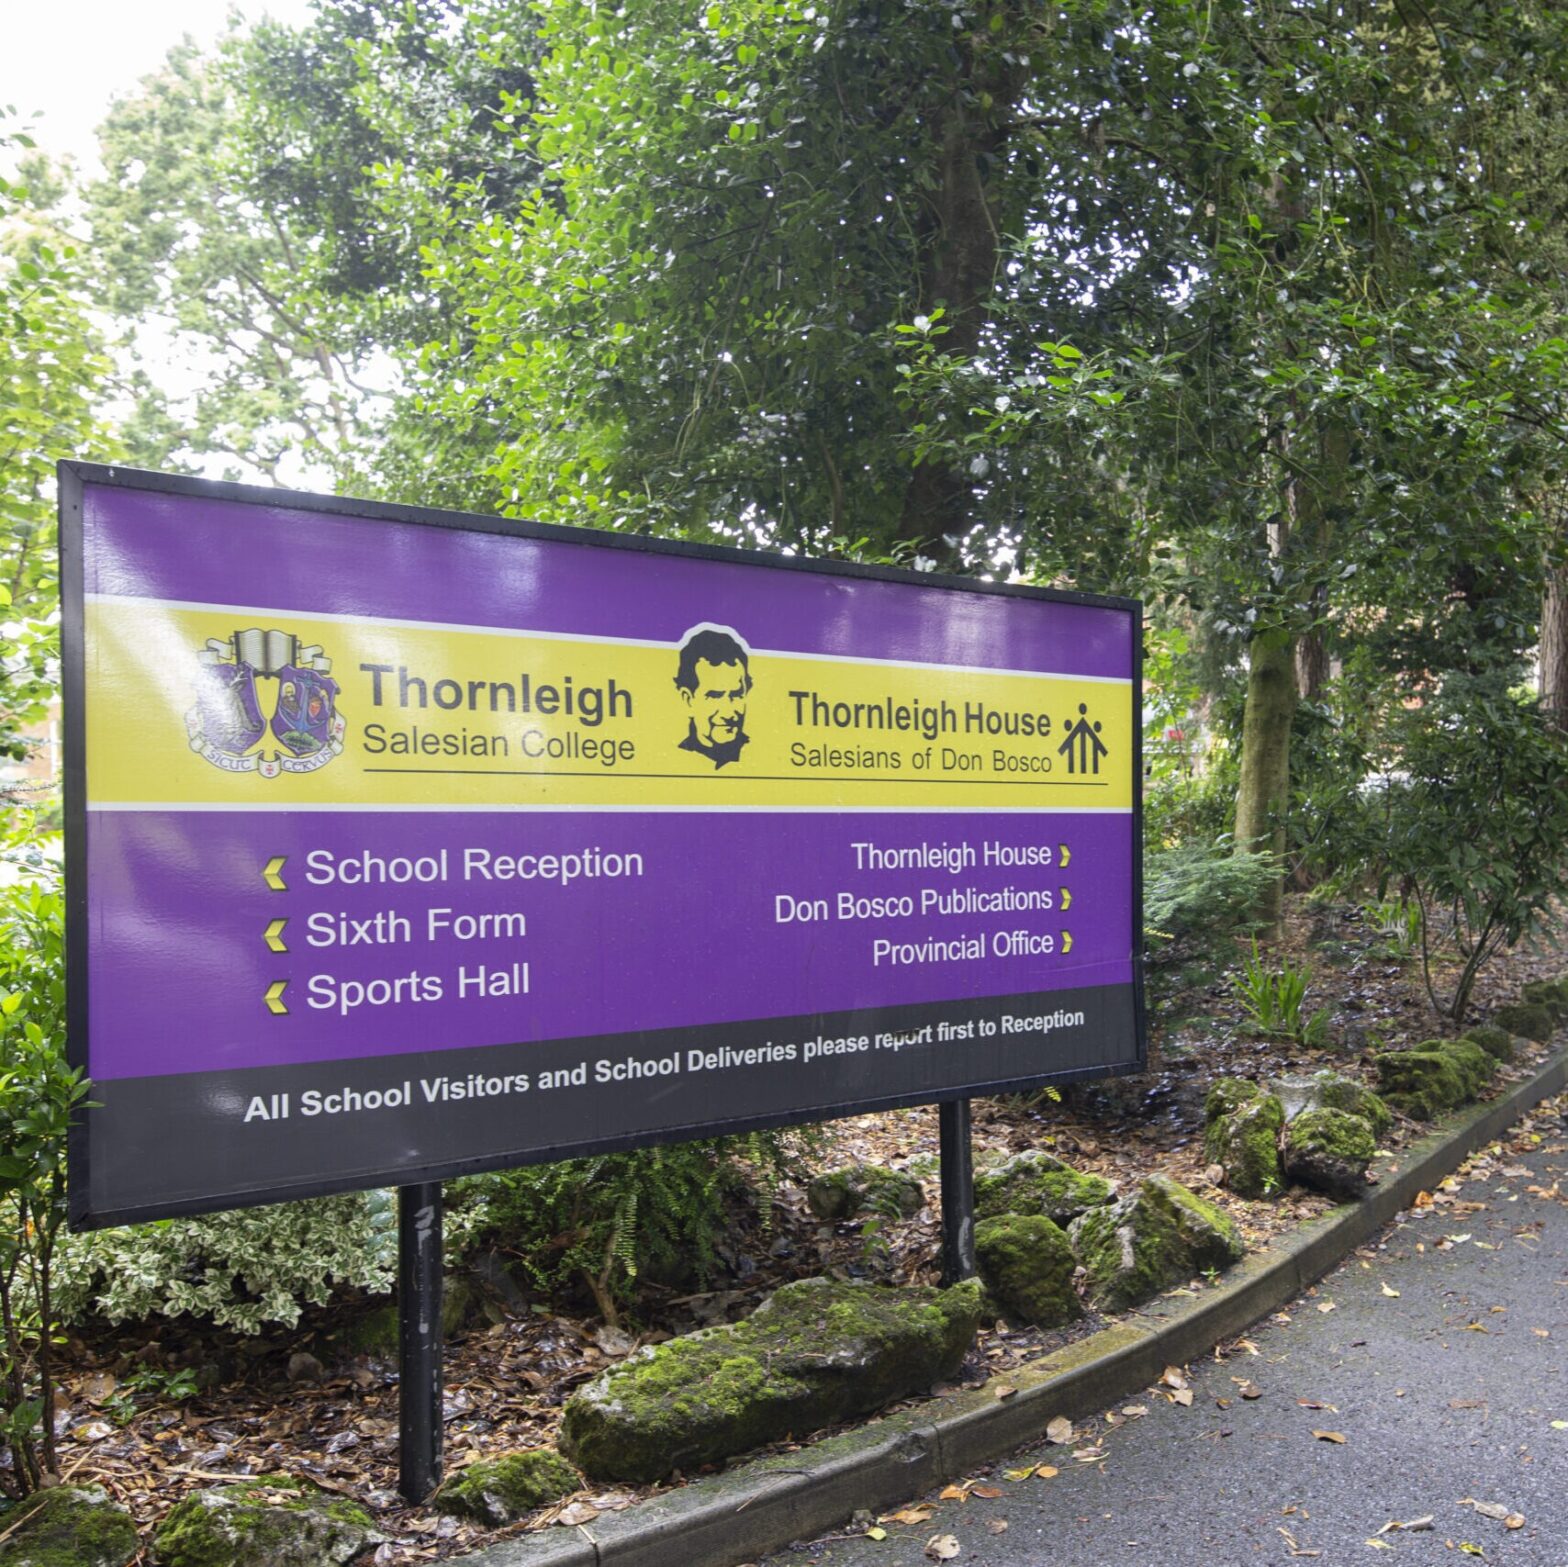 Tamlite Thornleigh Salesian College exterior sign